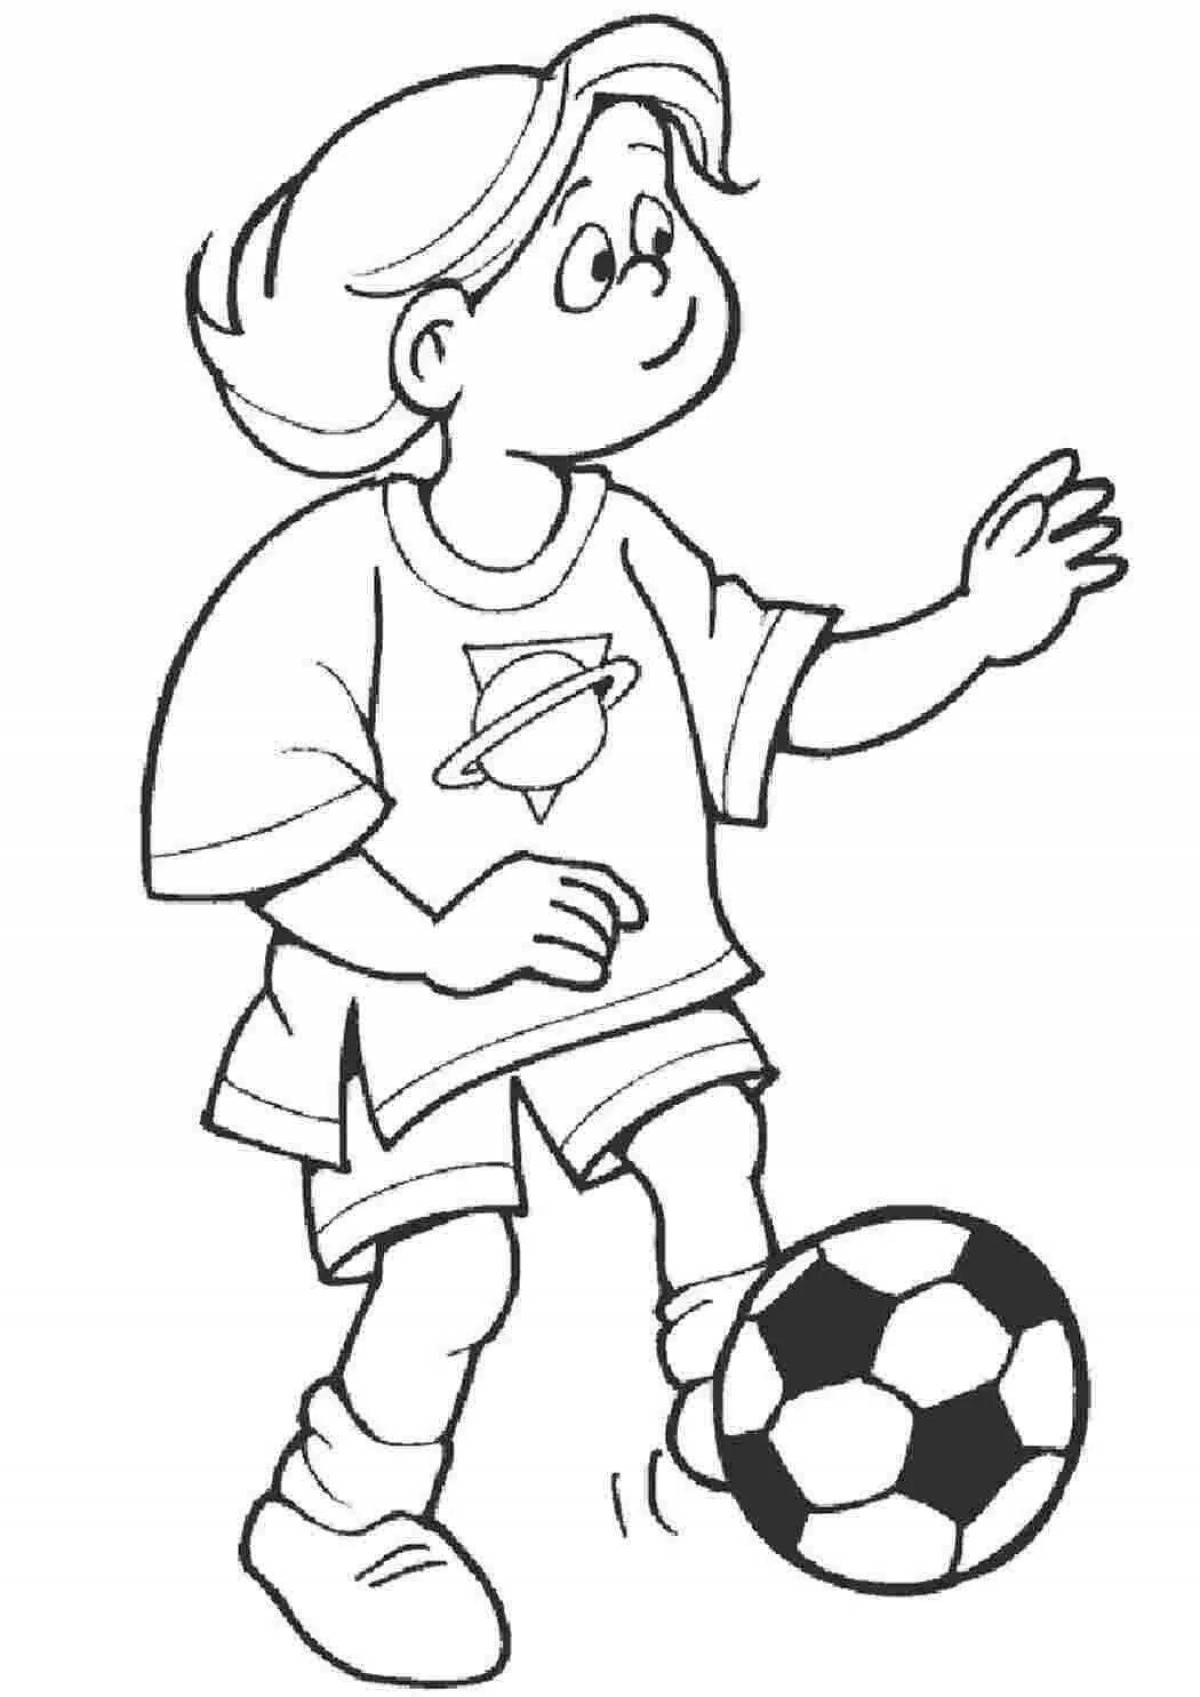 Coloring page of a joyful boy playing football